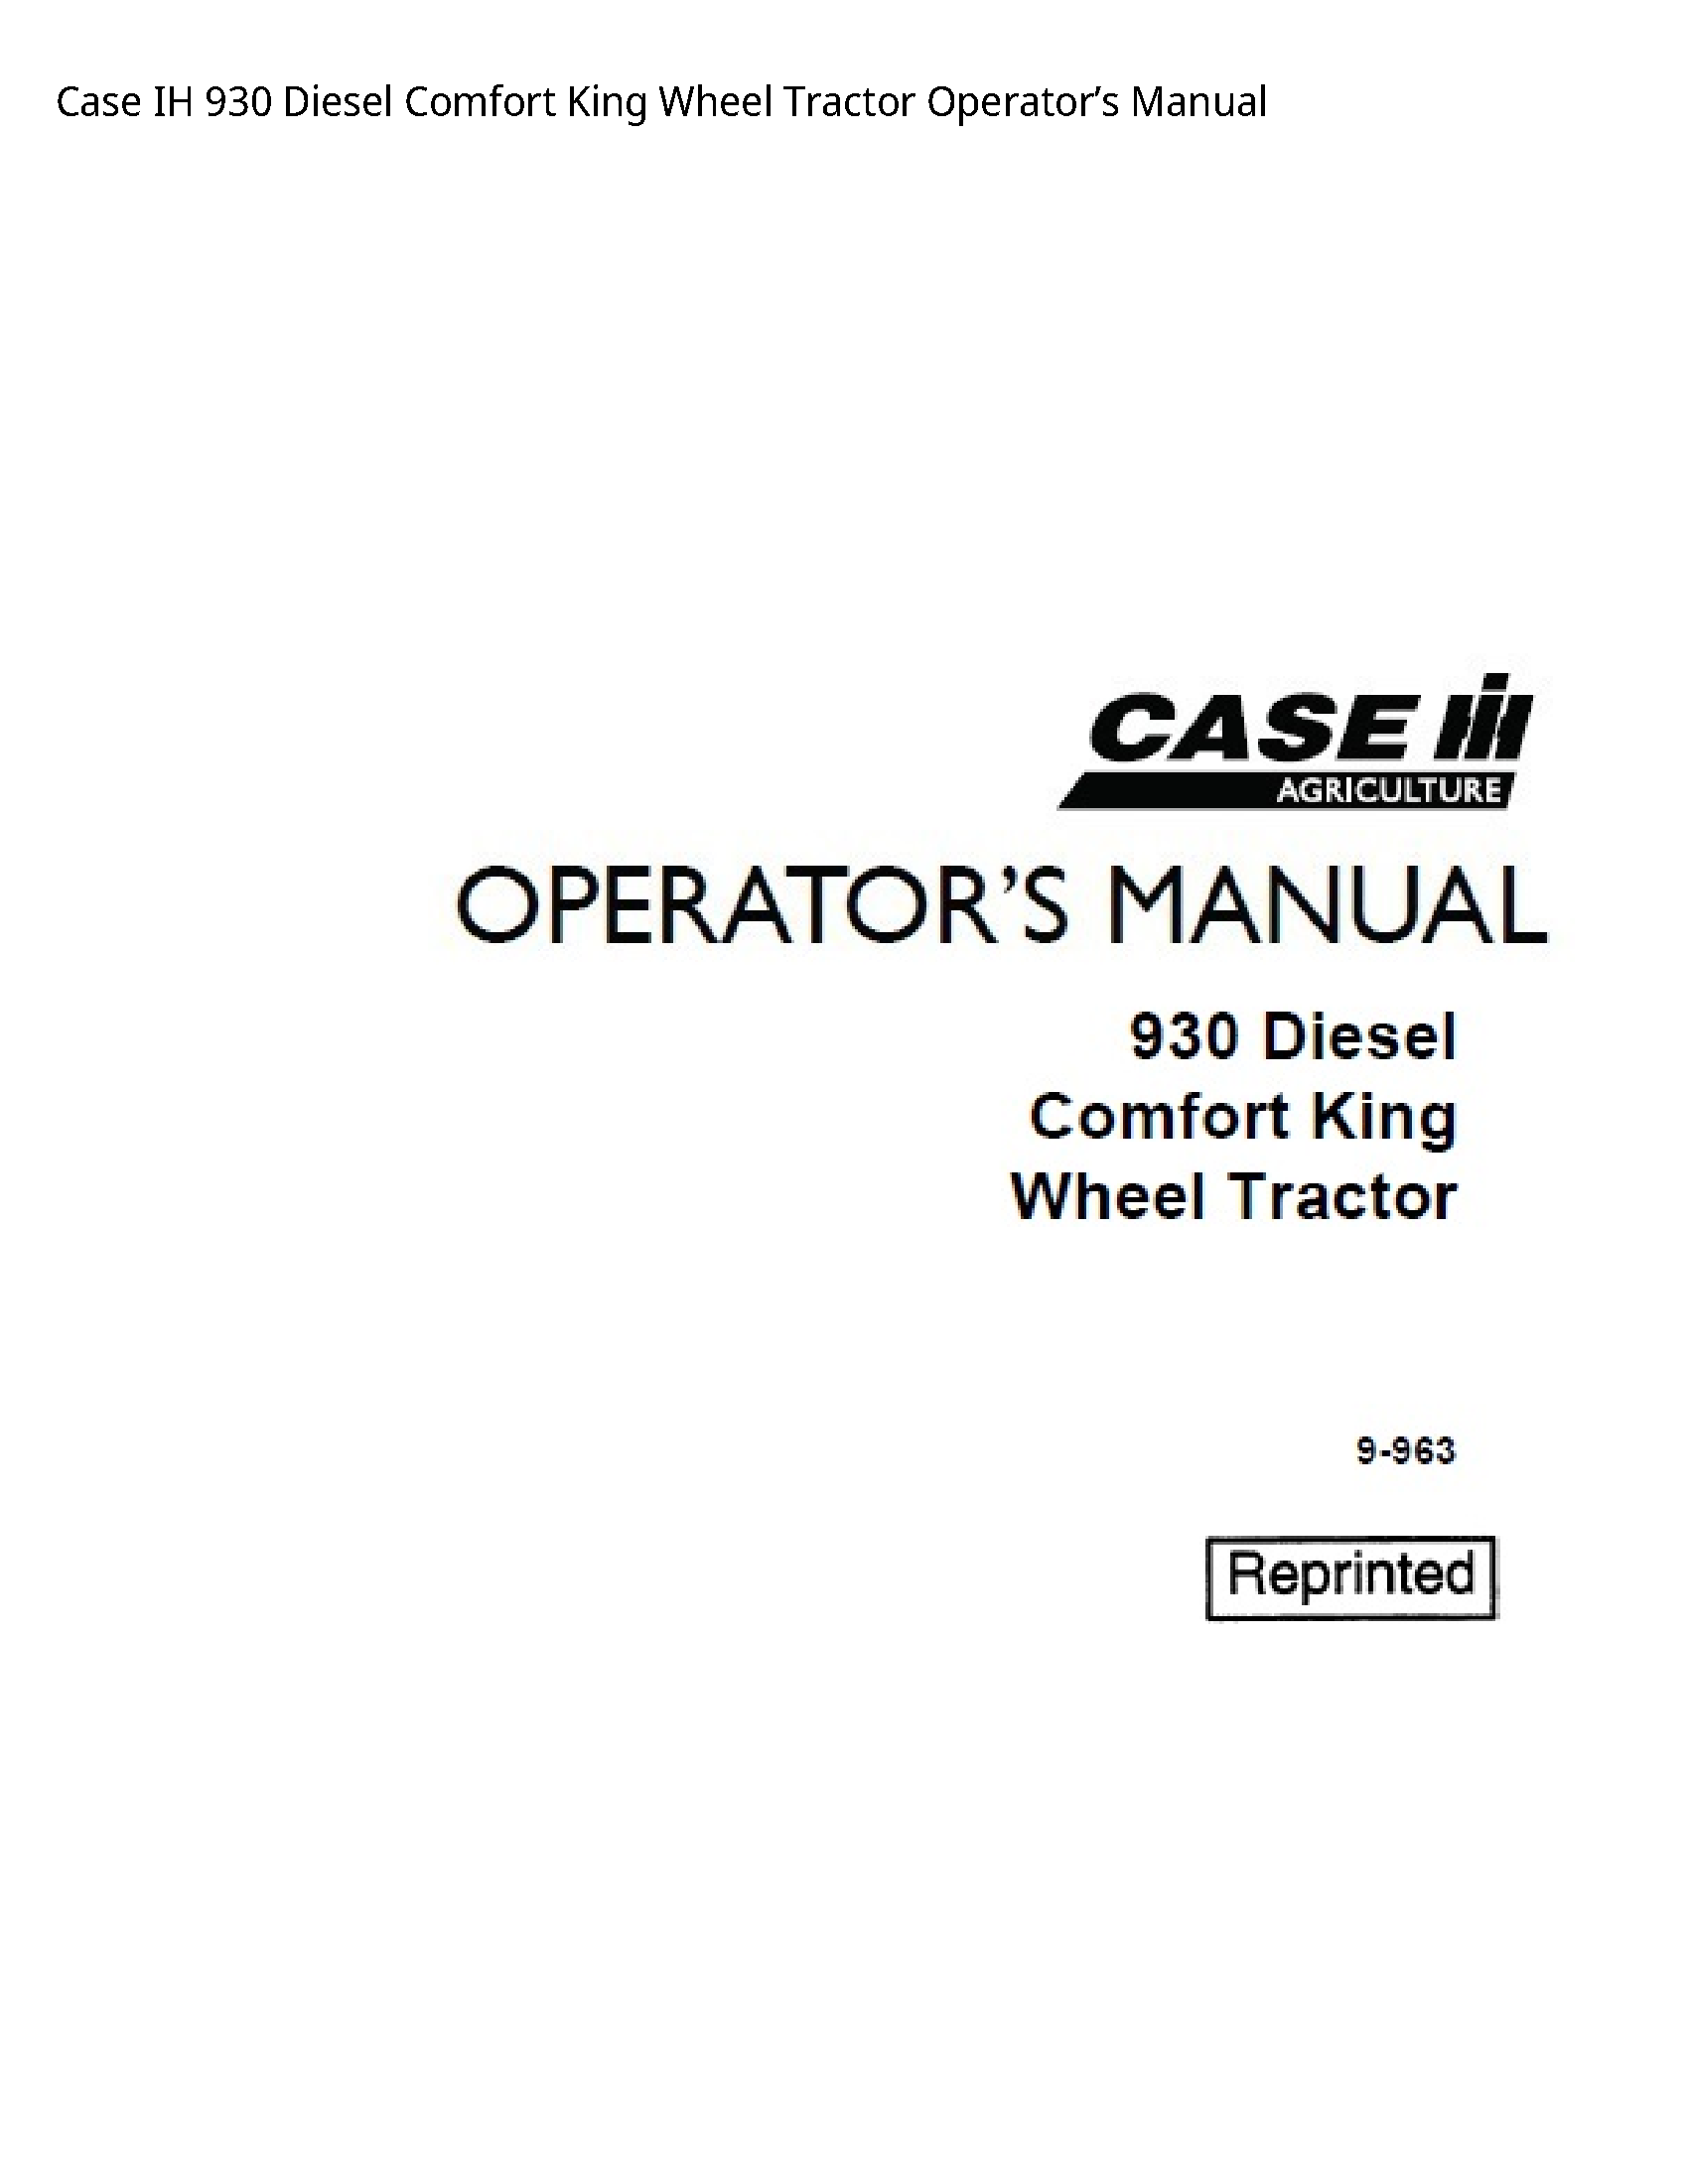 Case/Case IH 930 IH Diesel Comfort King Wheel Tractor Operator’s manual